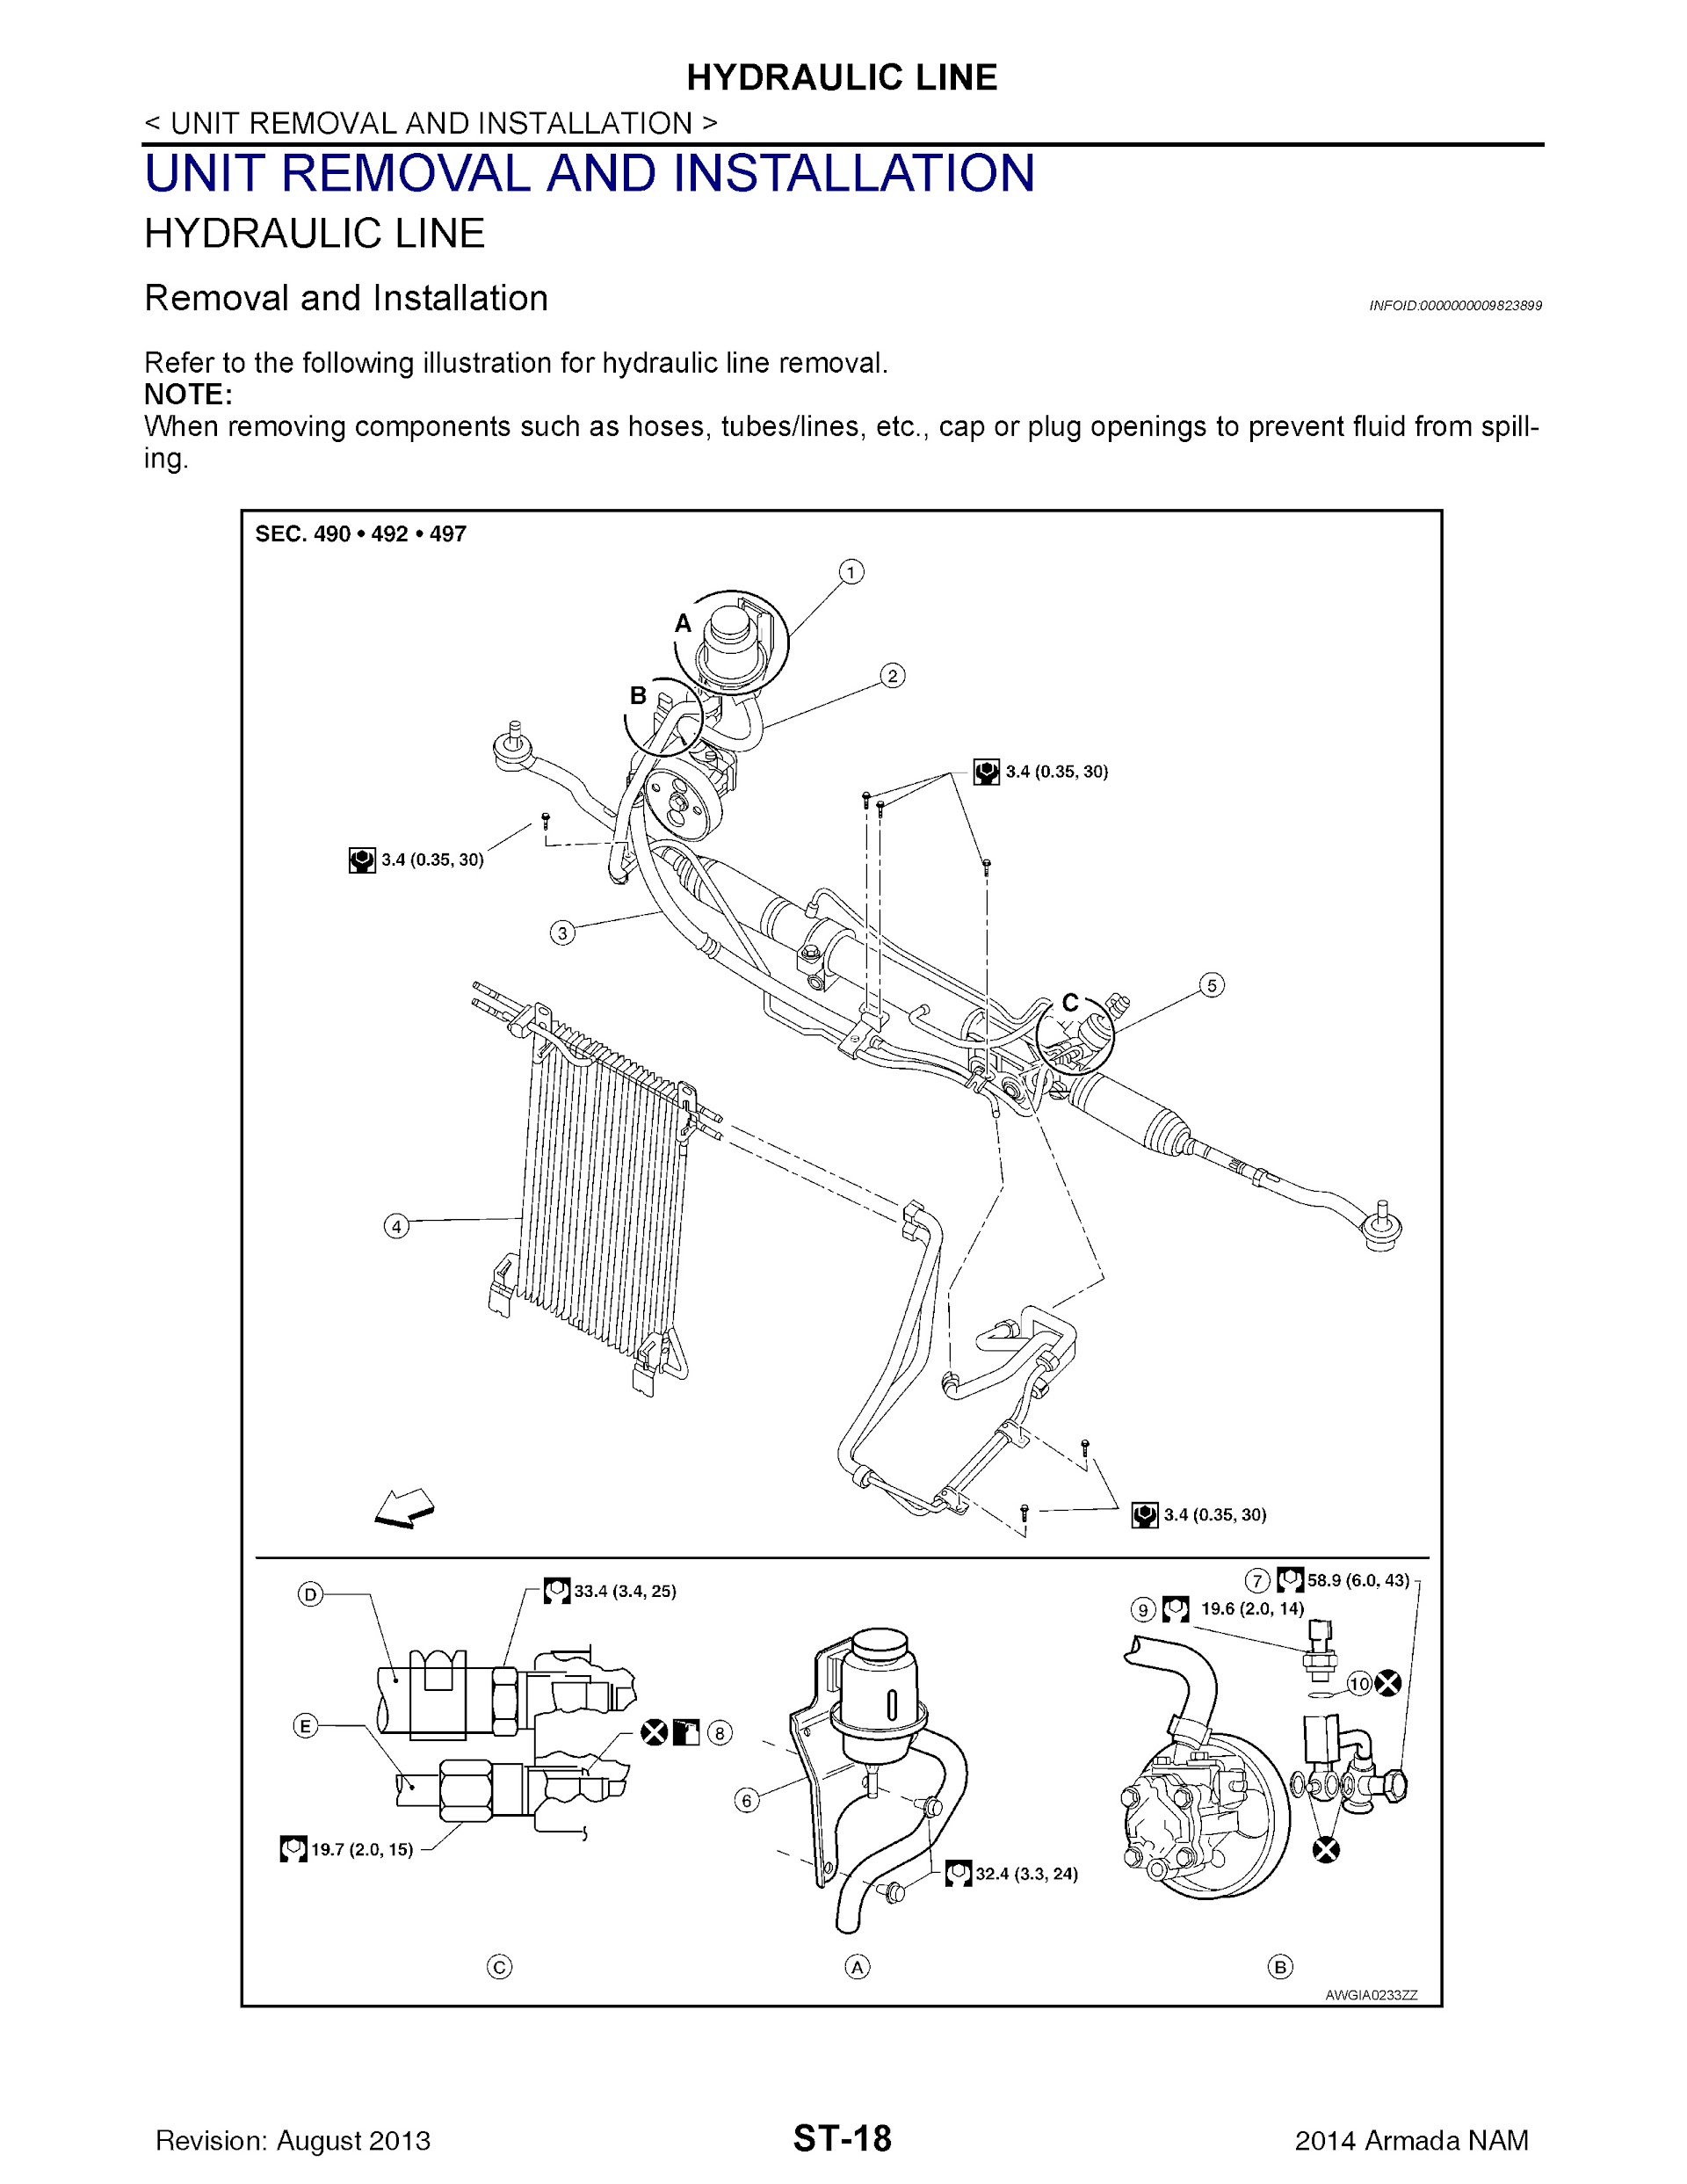 CONTENTS: 2014 Nissan Armada Repair Manual, Hydraulic Line